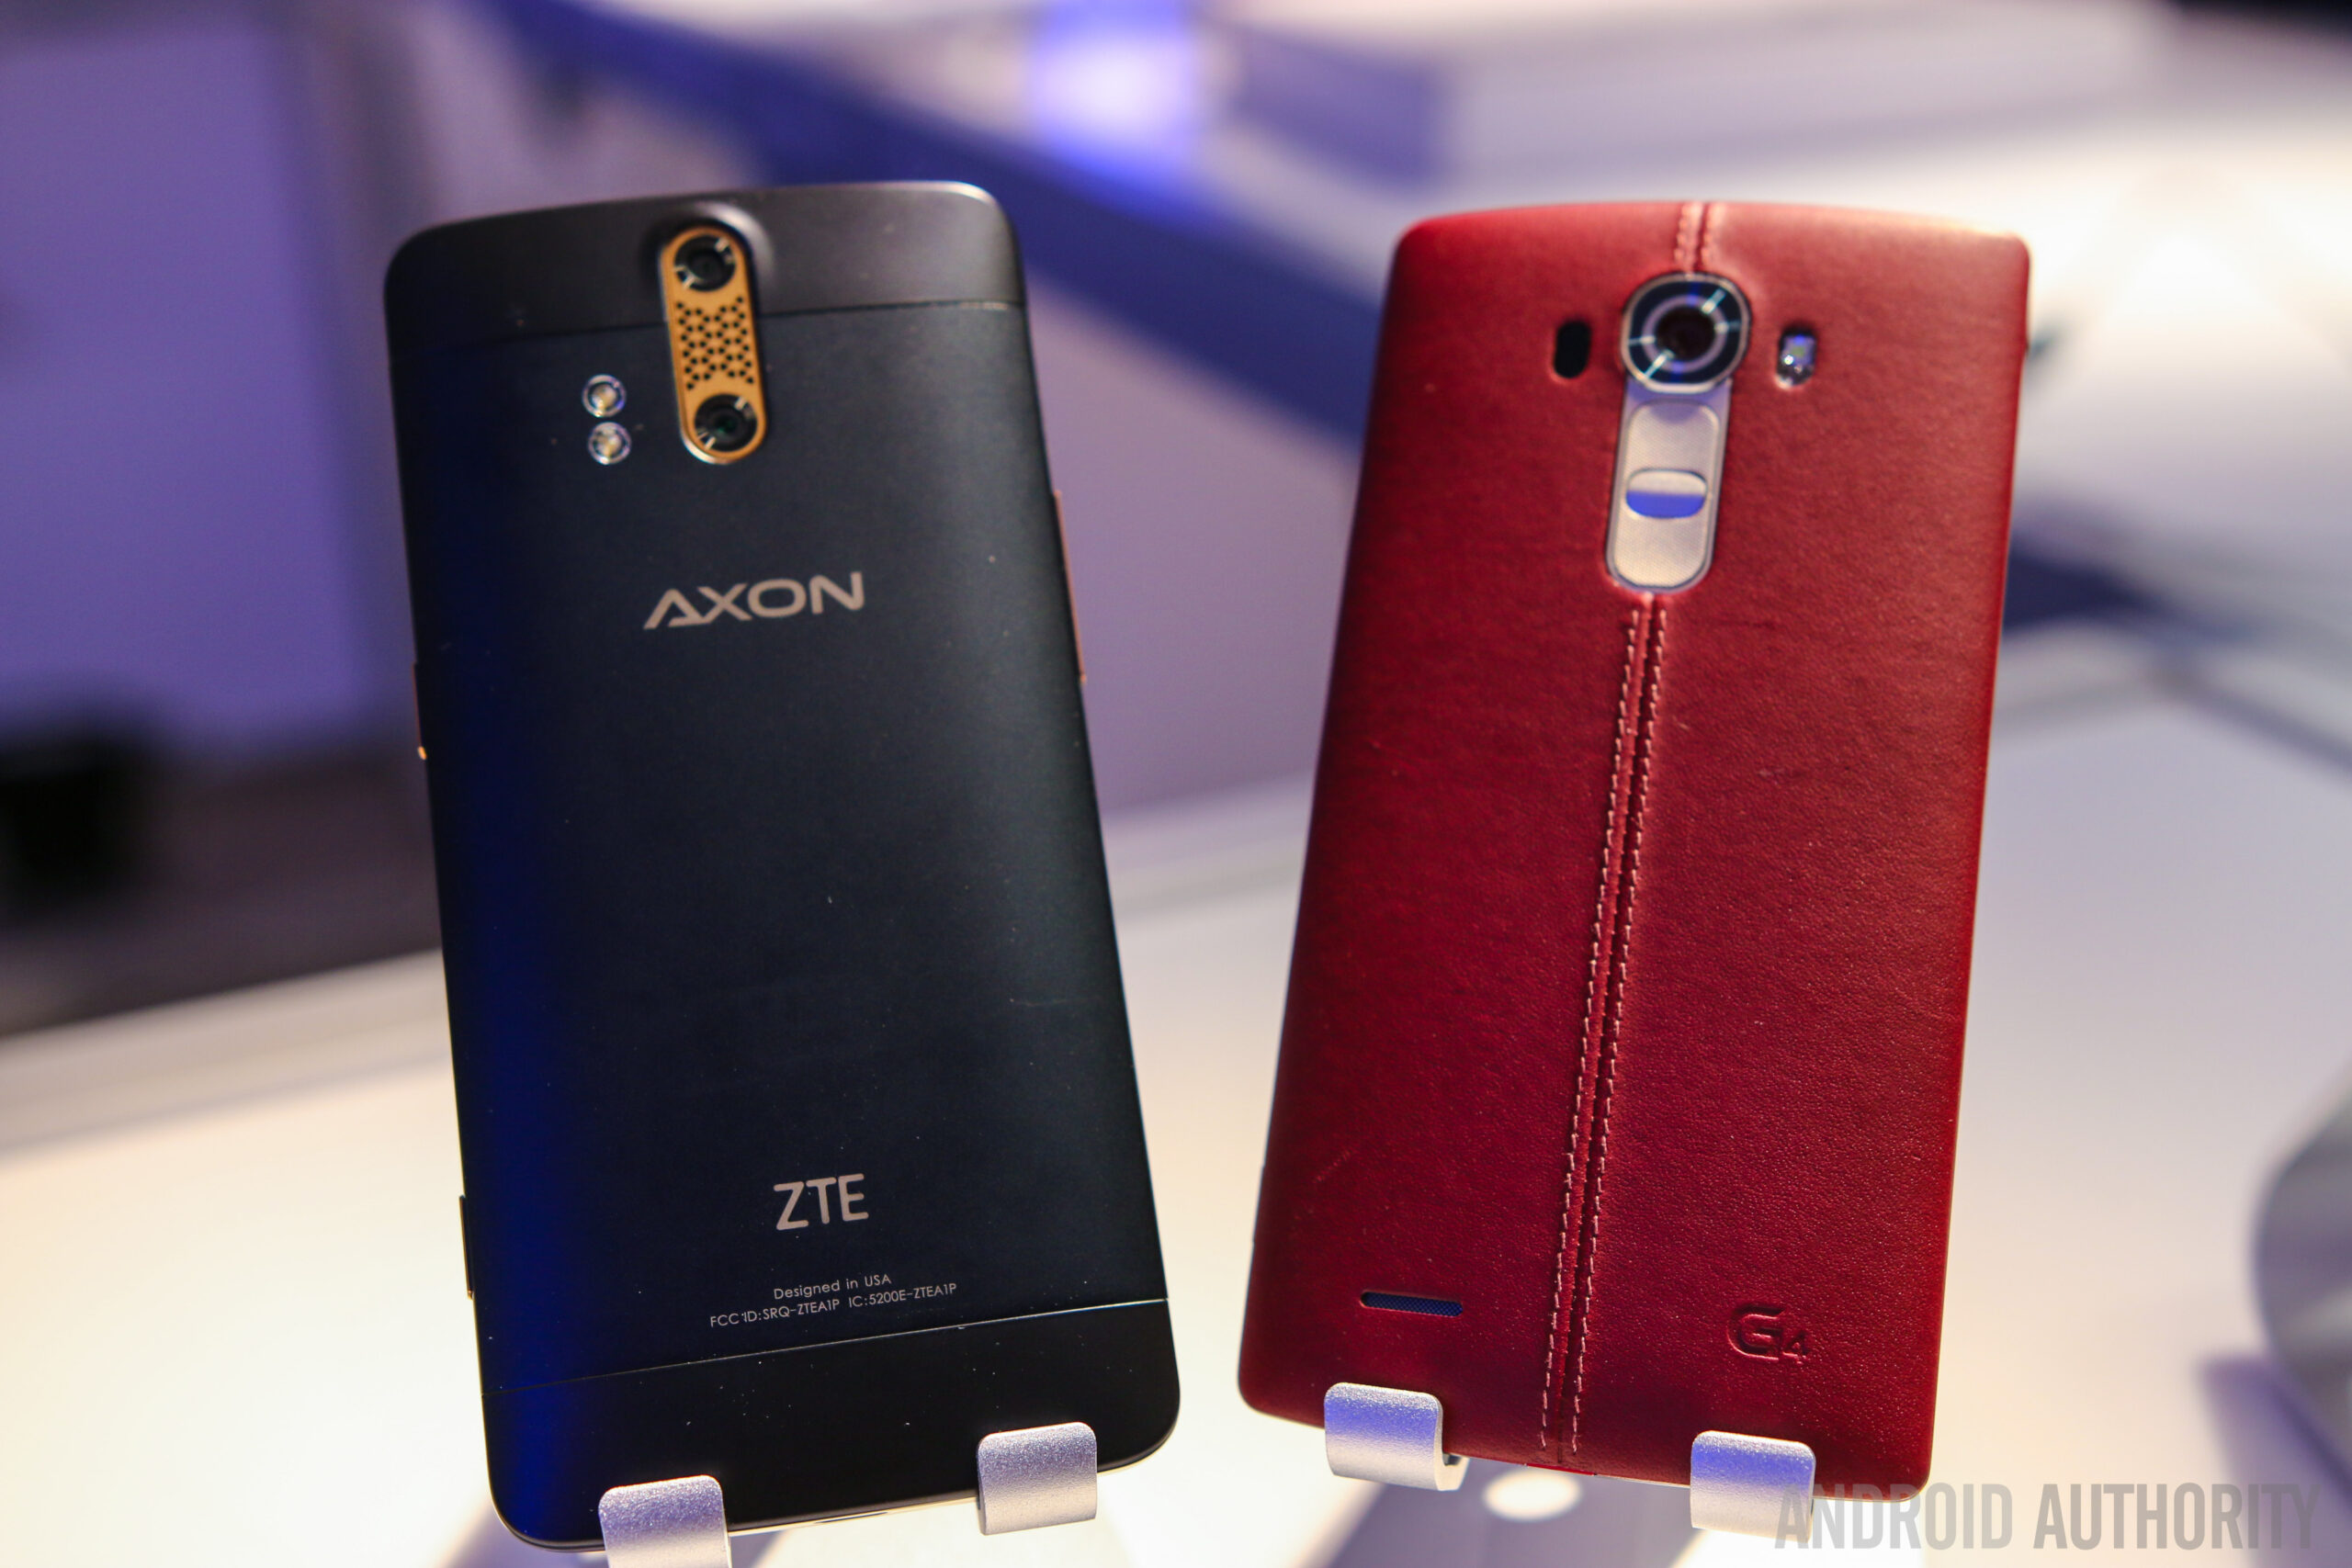 ZTE AXON Phone vs LG G4 Quick Look-5